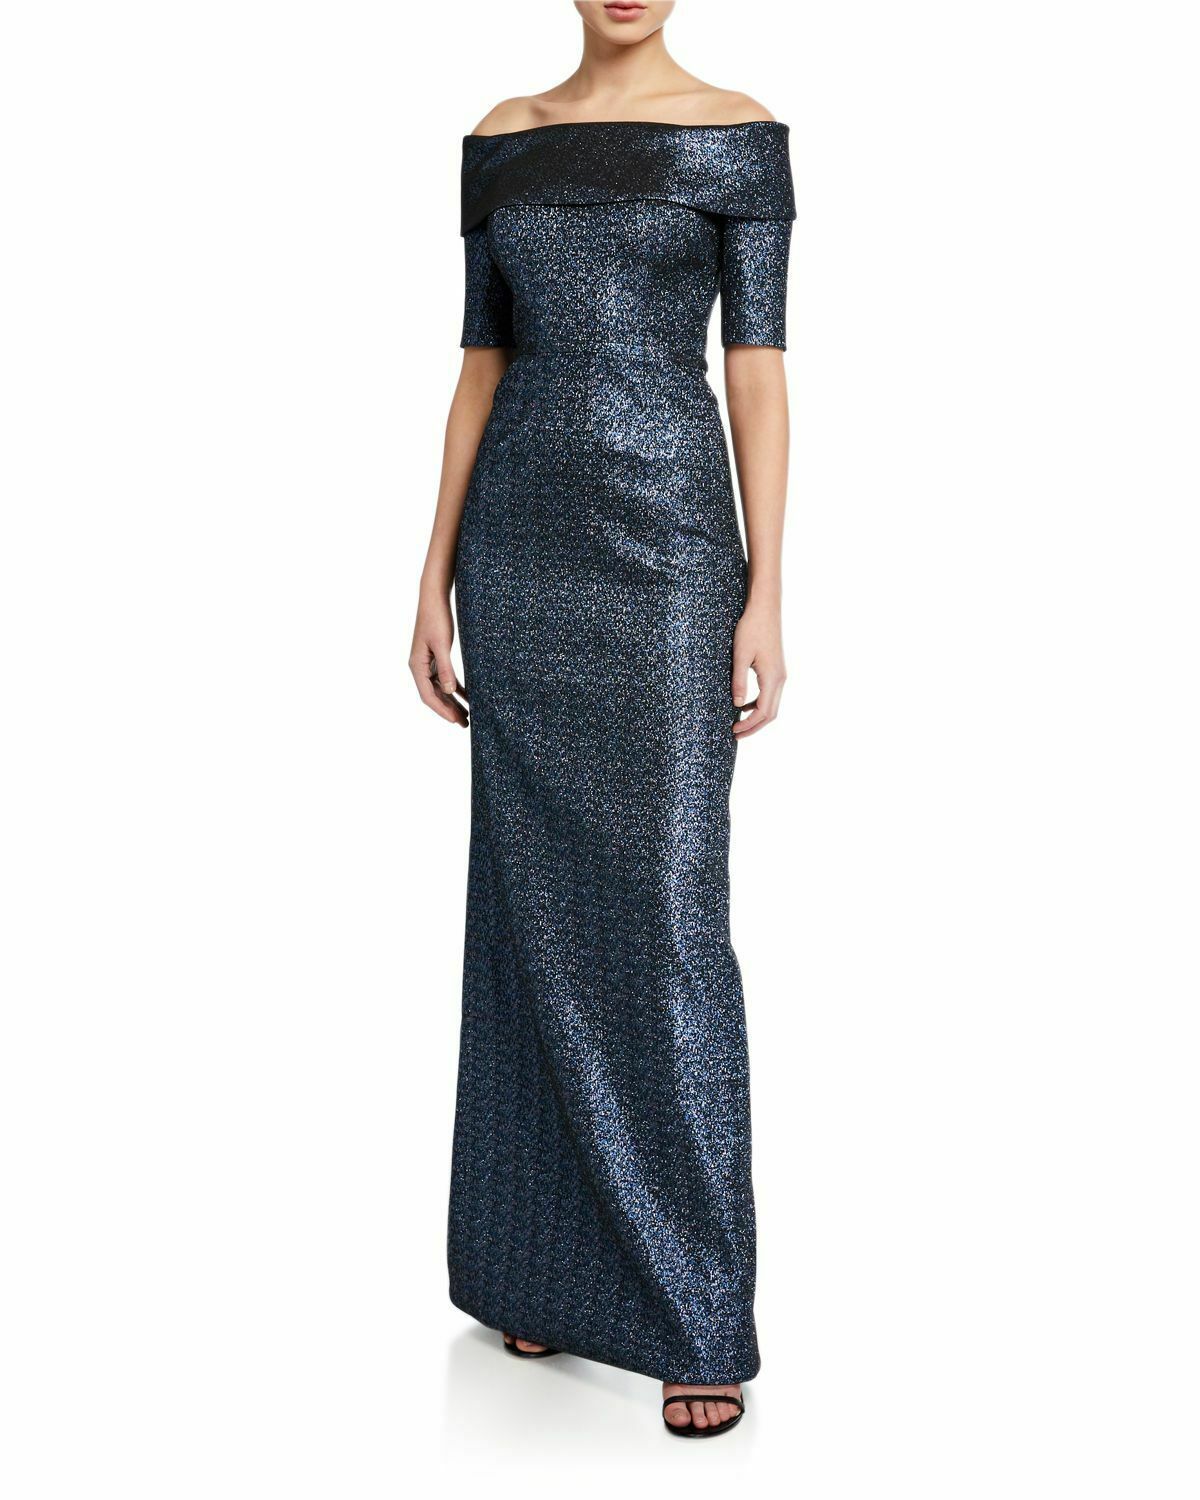 Nwt Teri Jon Off-the-shoulder Blue Metallic Jacquard Column Gown 14 $680